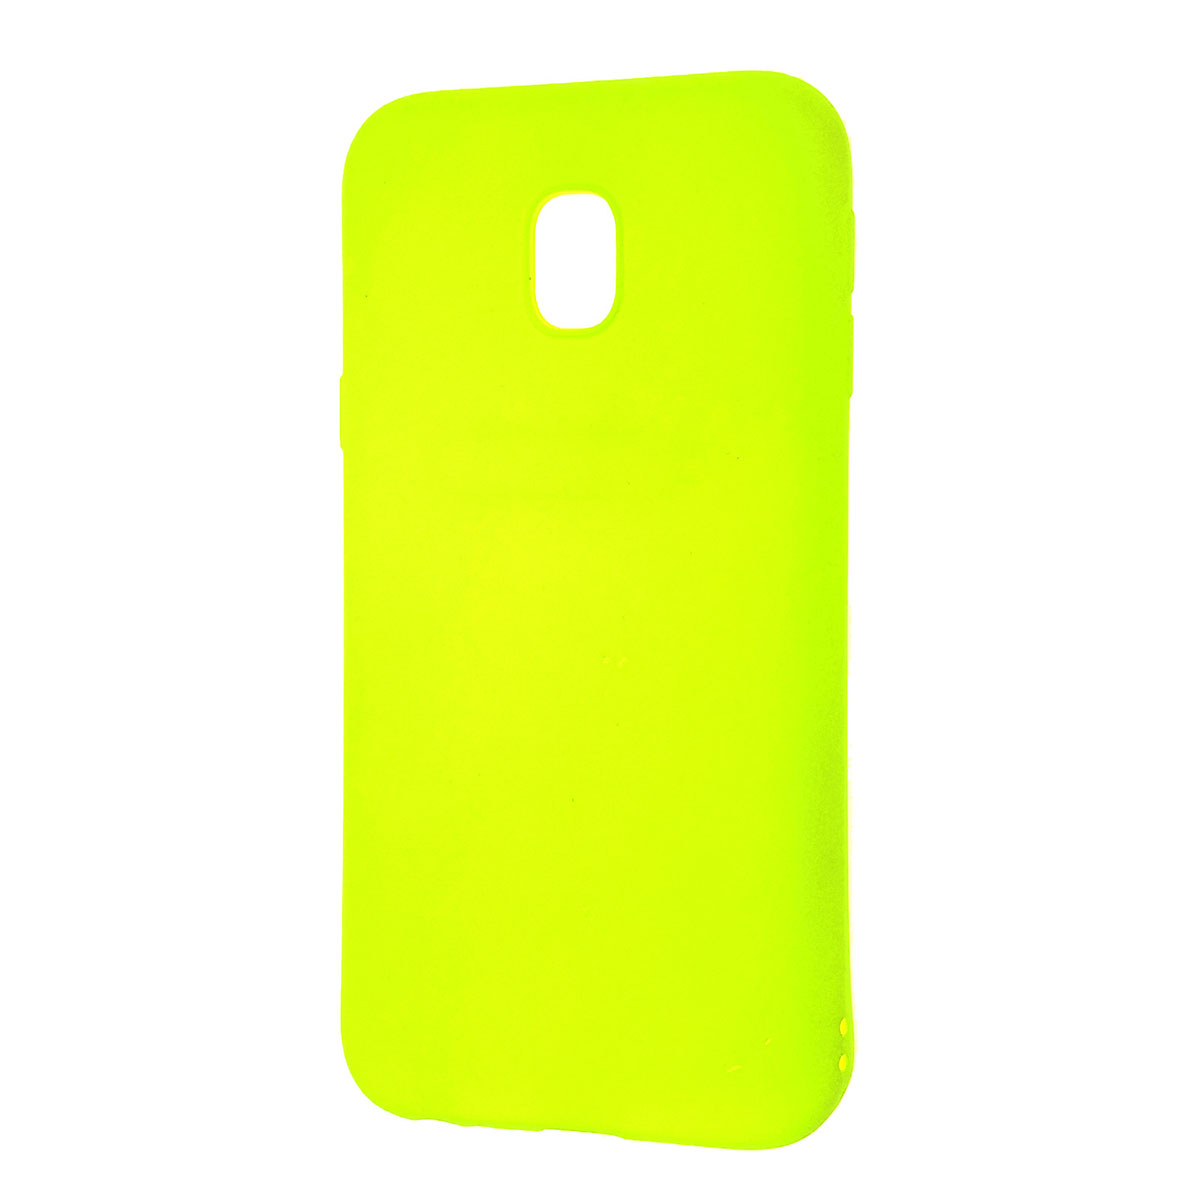 Чехол накладка Fashion Case для SAMSUNG Galaxy J3 2017 (SM-J330), силикон, цвет желтый.